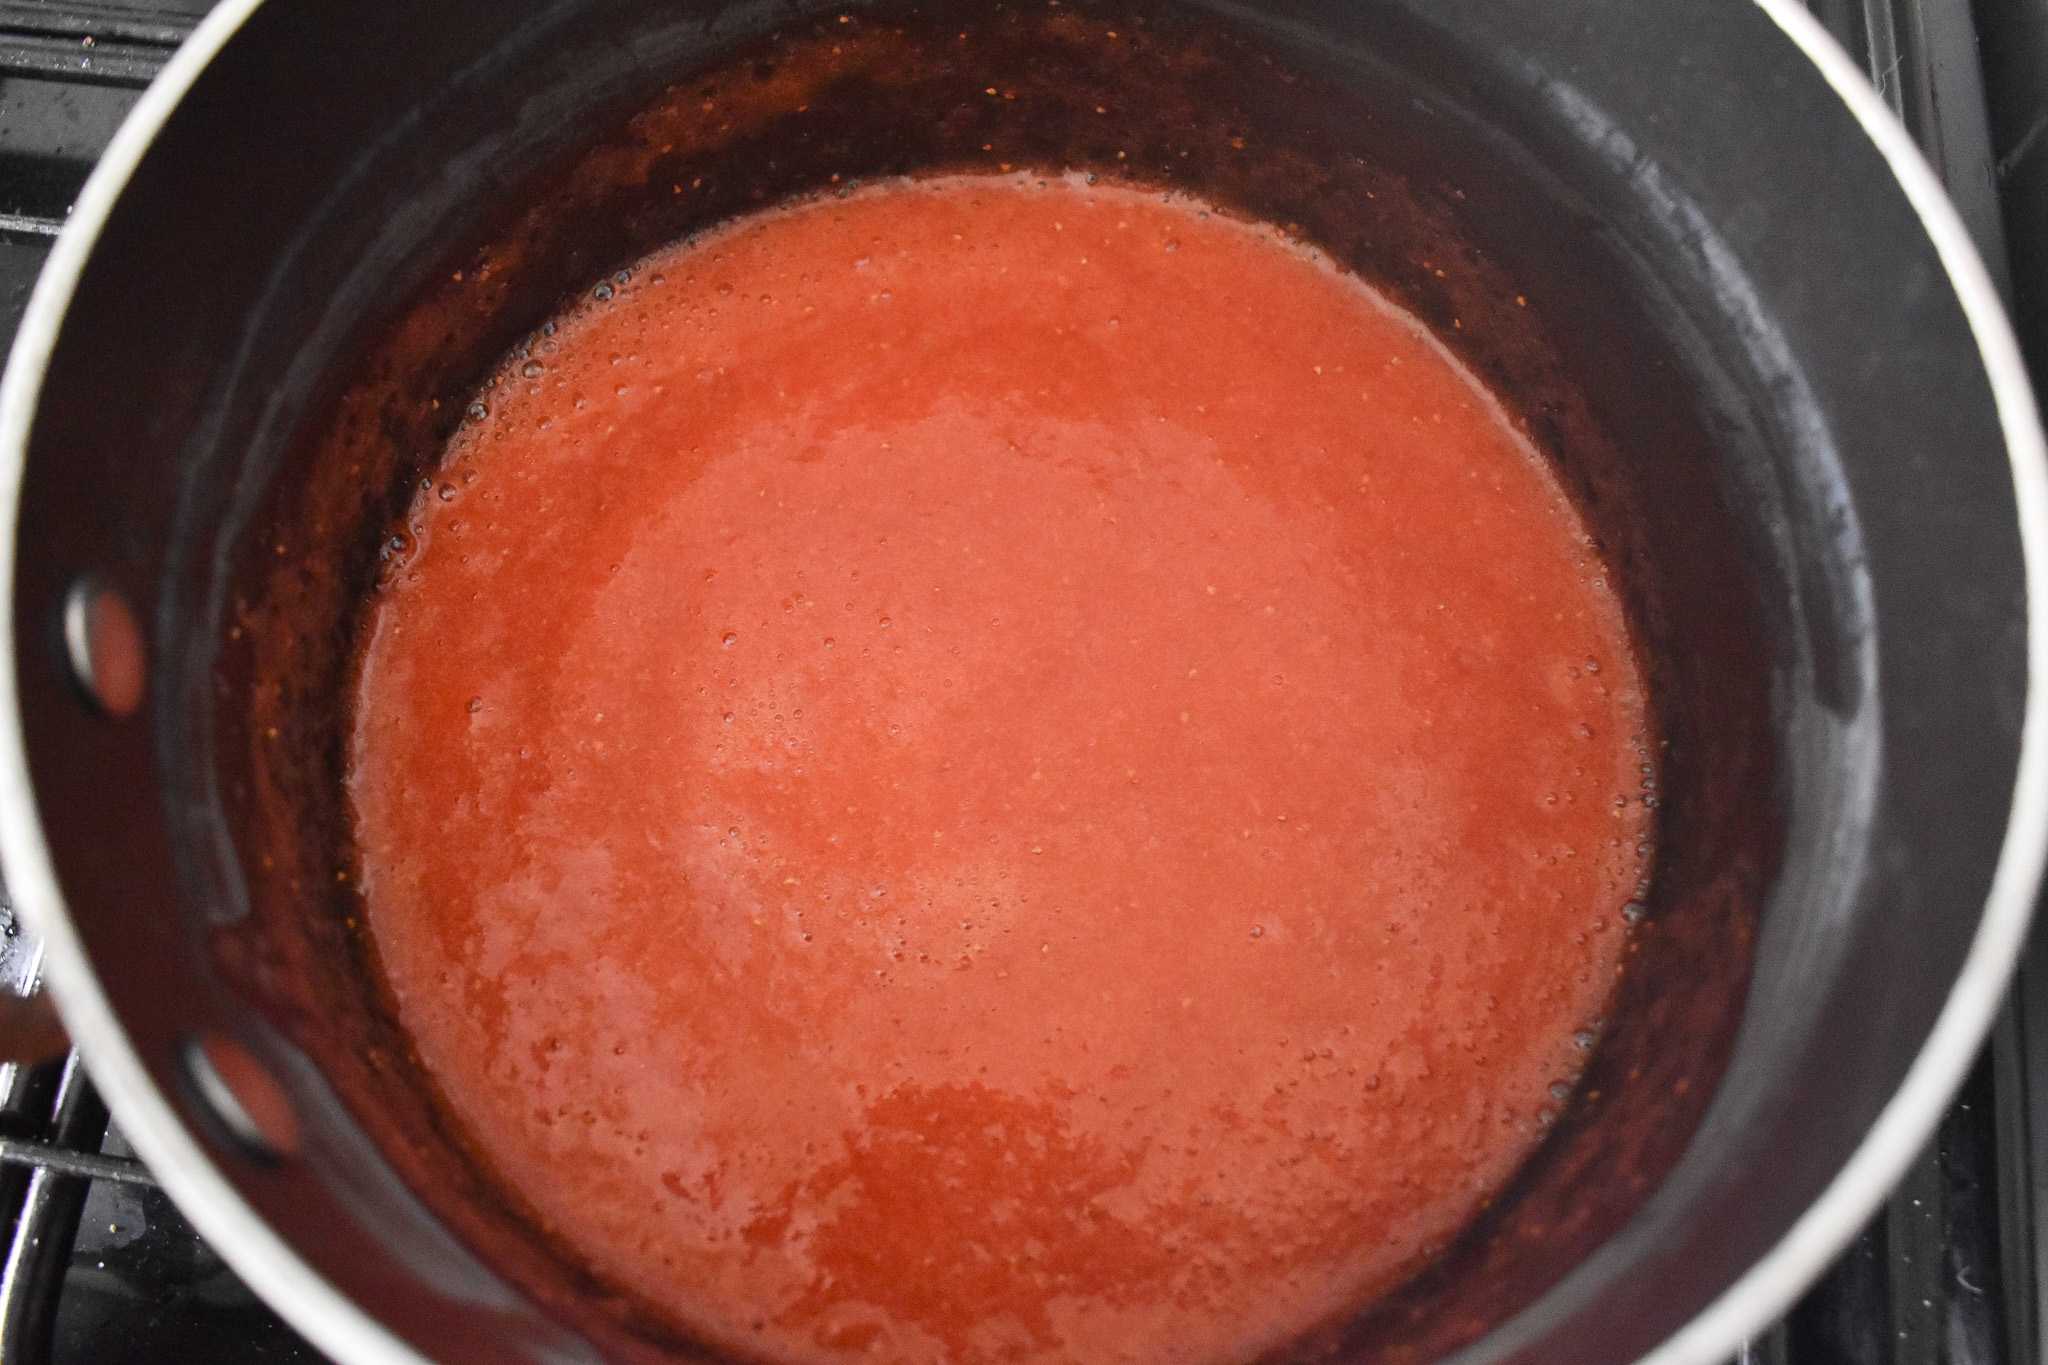 Pureed strawberries in a saucepan.